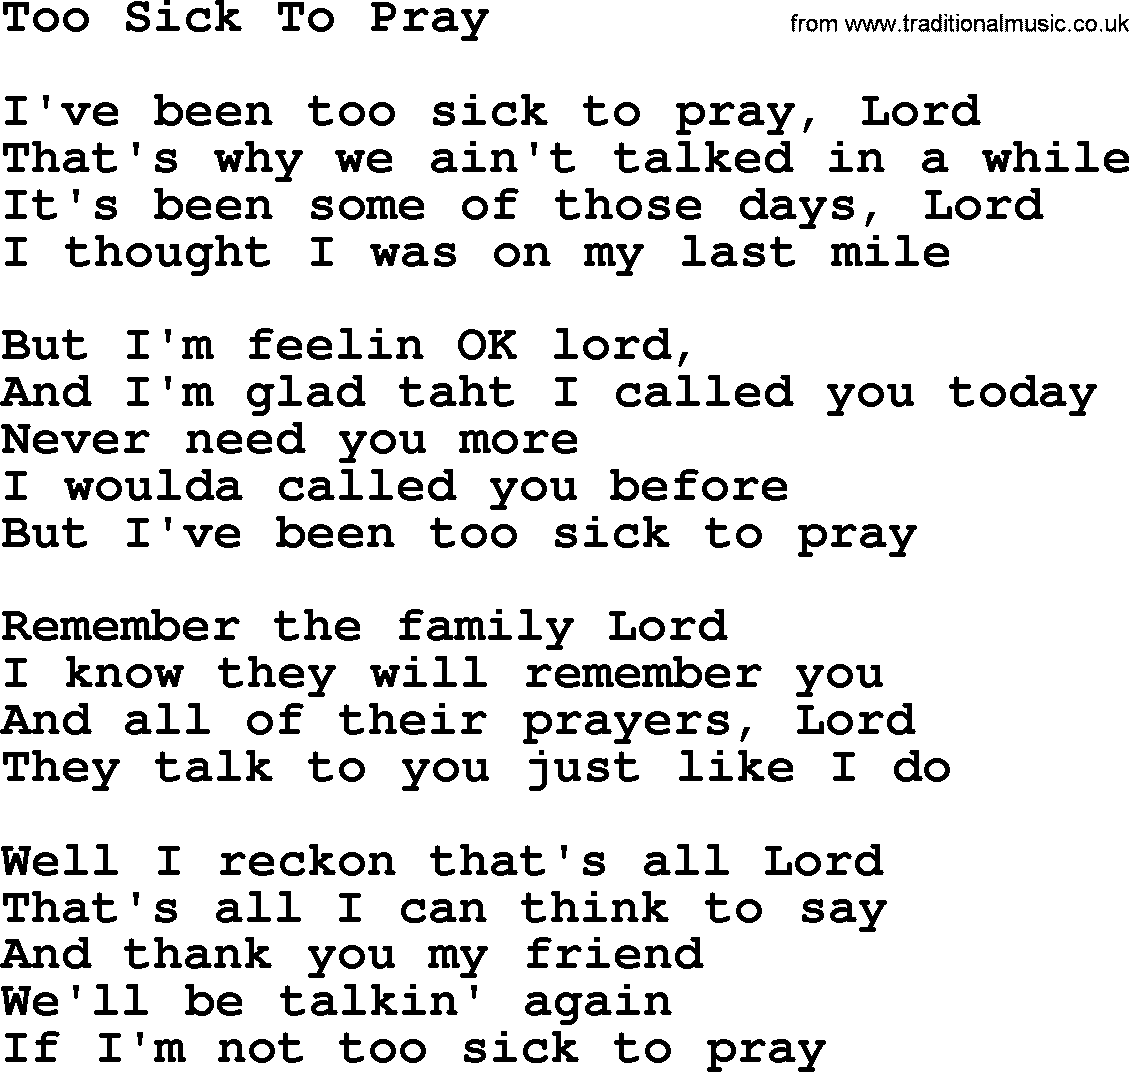 Willie Nelson song: Too Sick To Pray lyrics